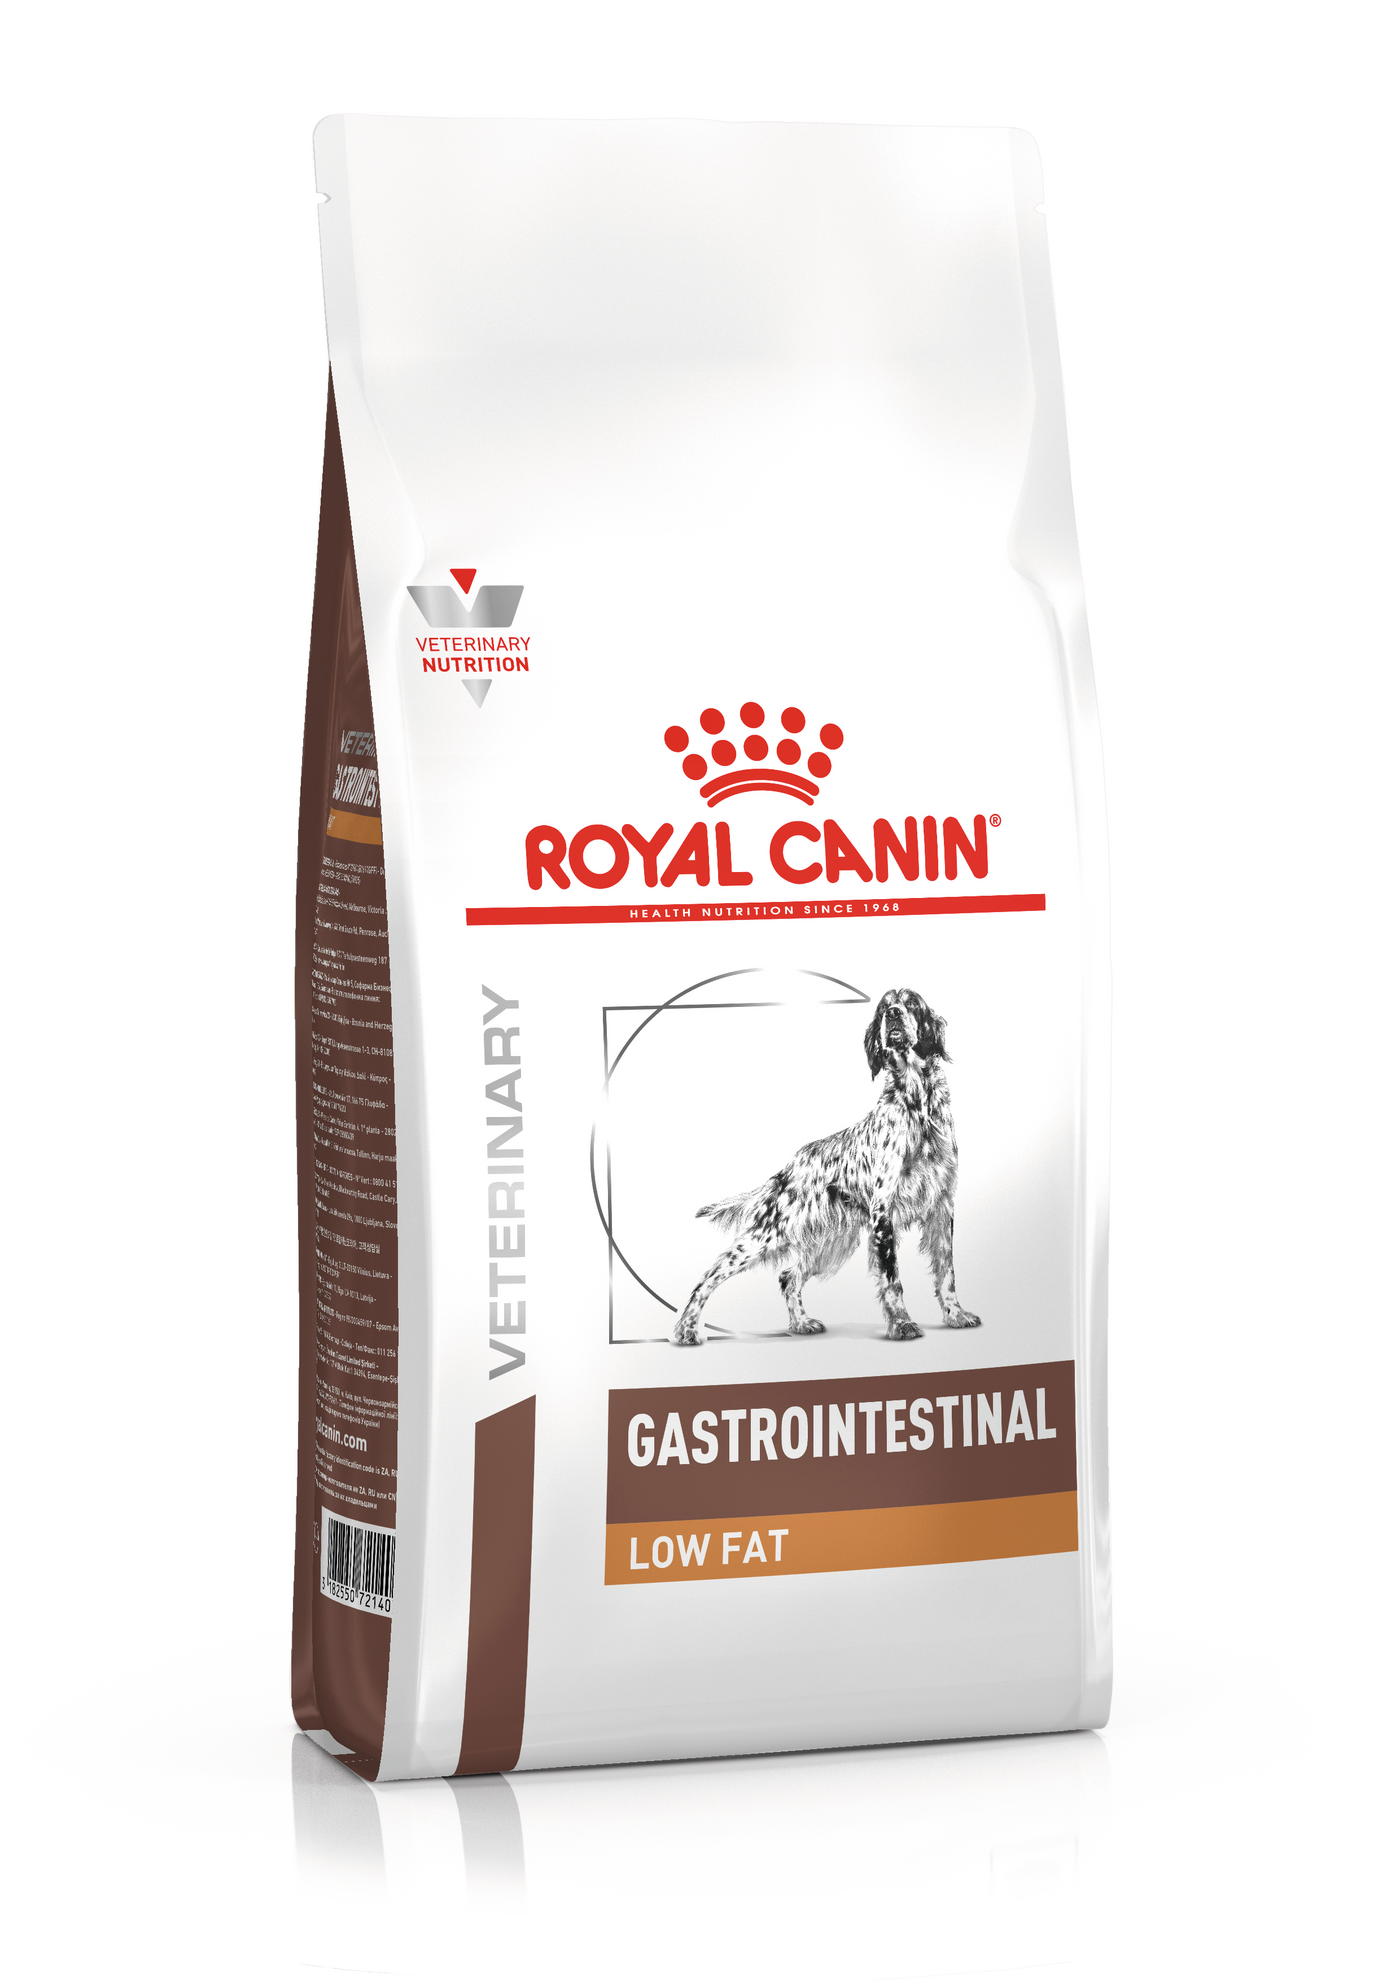 Gastro Intestinal Low Fat Canine